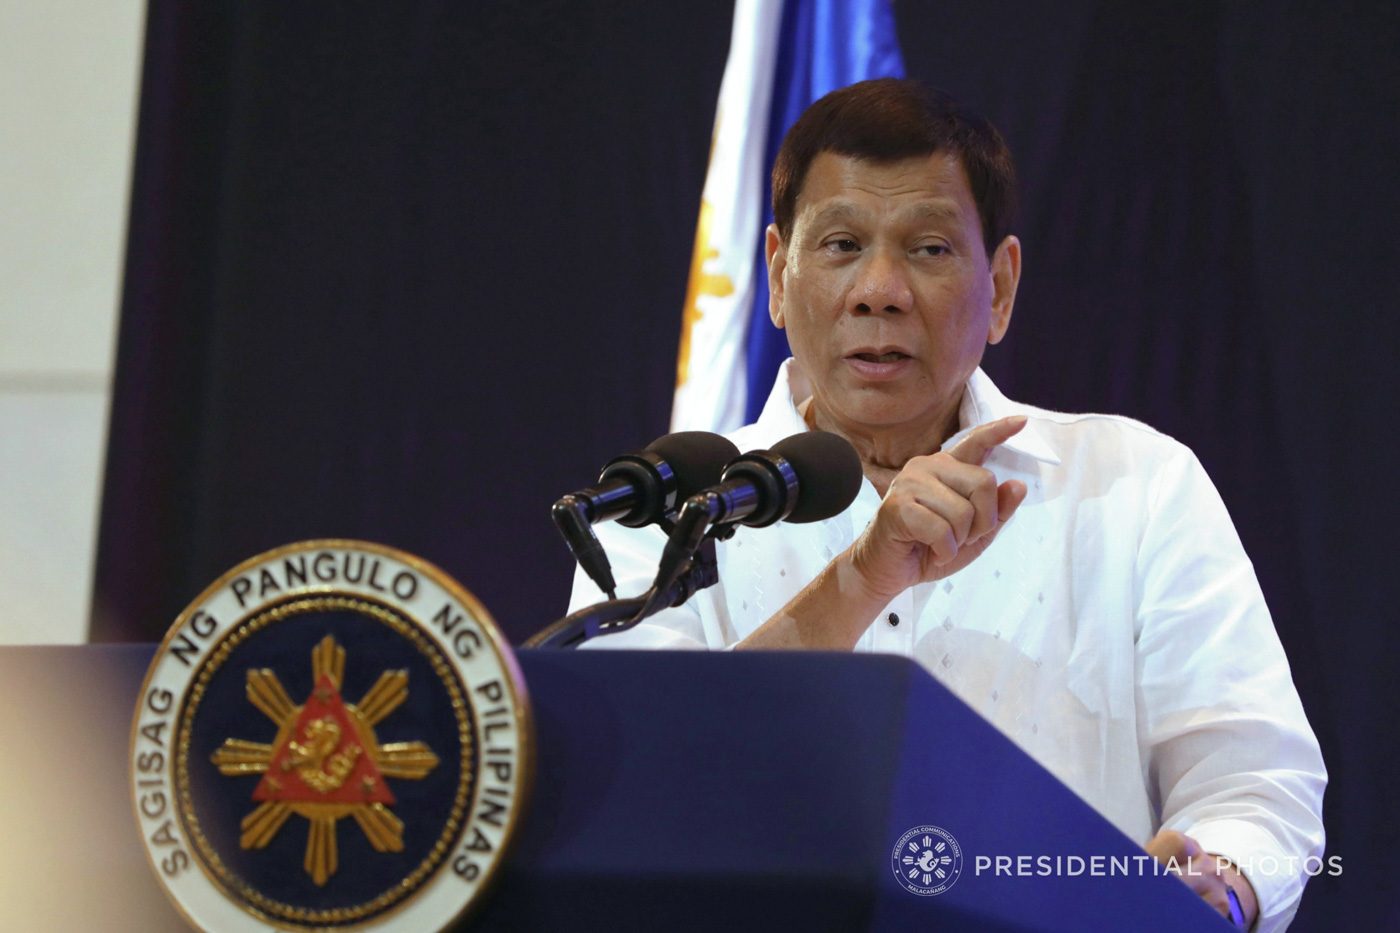 Duterte to UN special rapporteur Garcia-Sayan: ‘Go to hell’